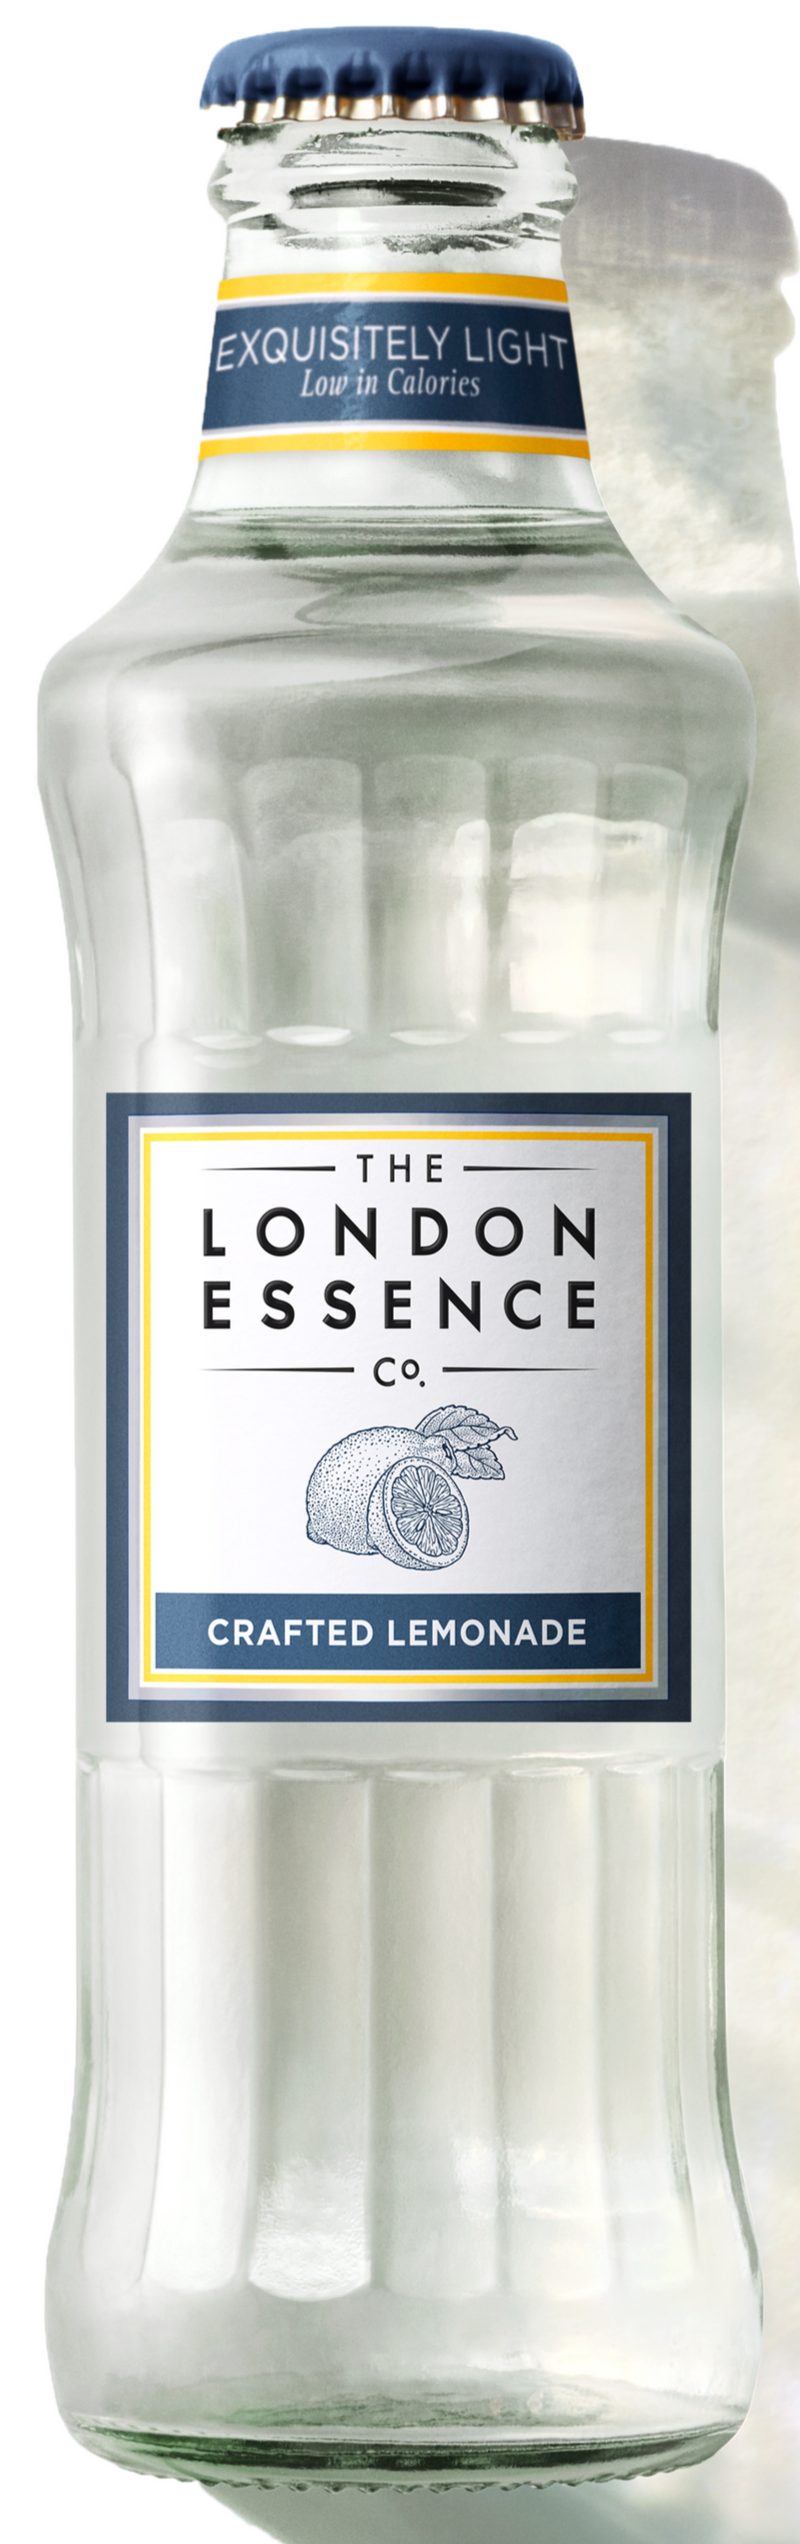 London Essence Lemonade 24x200ml